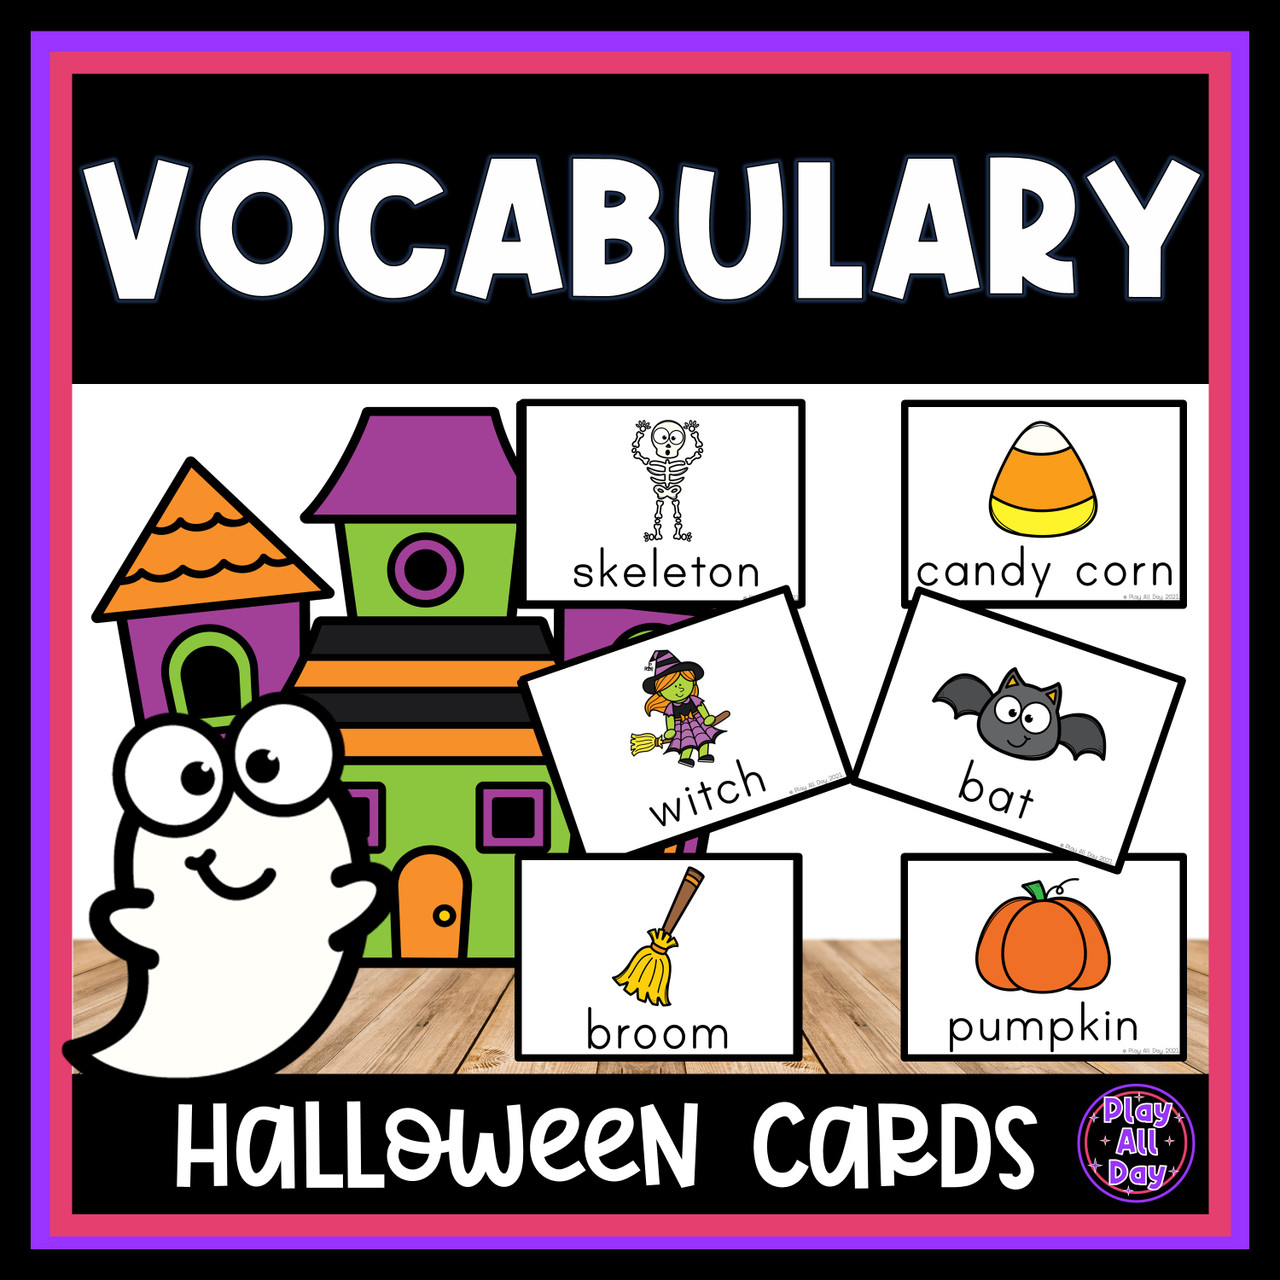 HALLOWEEN Themed Vocabulary Cards